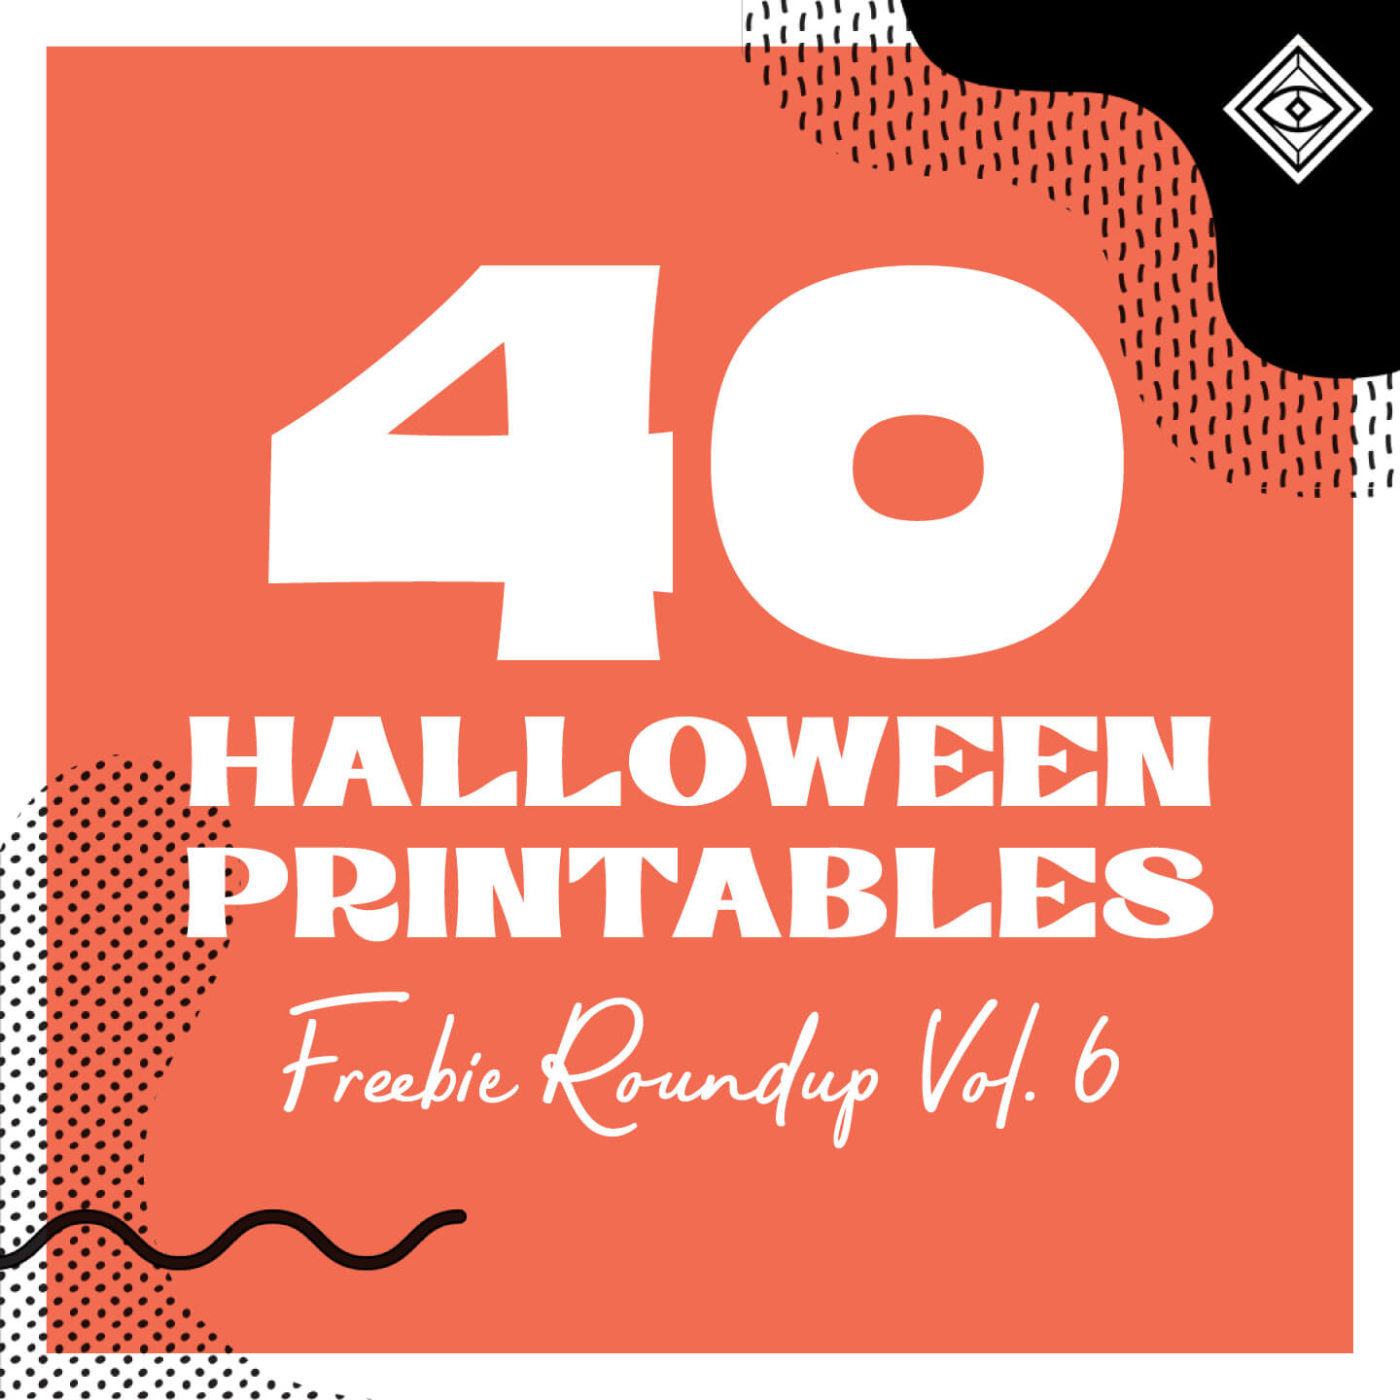 Free Halloween Printables: Vol. 6 • Little Gold Pixel • 40 Free Printables for Halloween